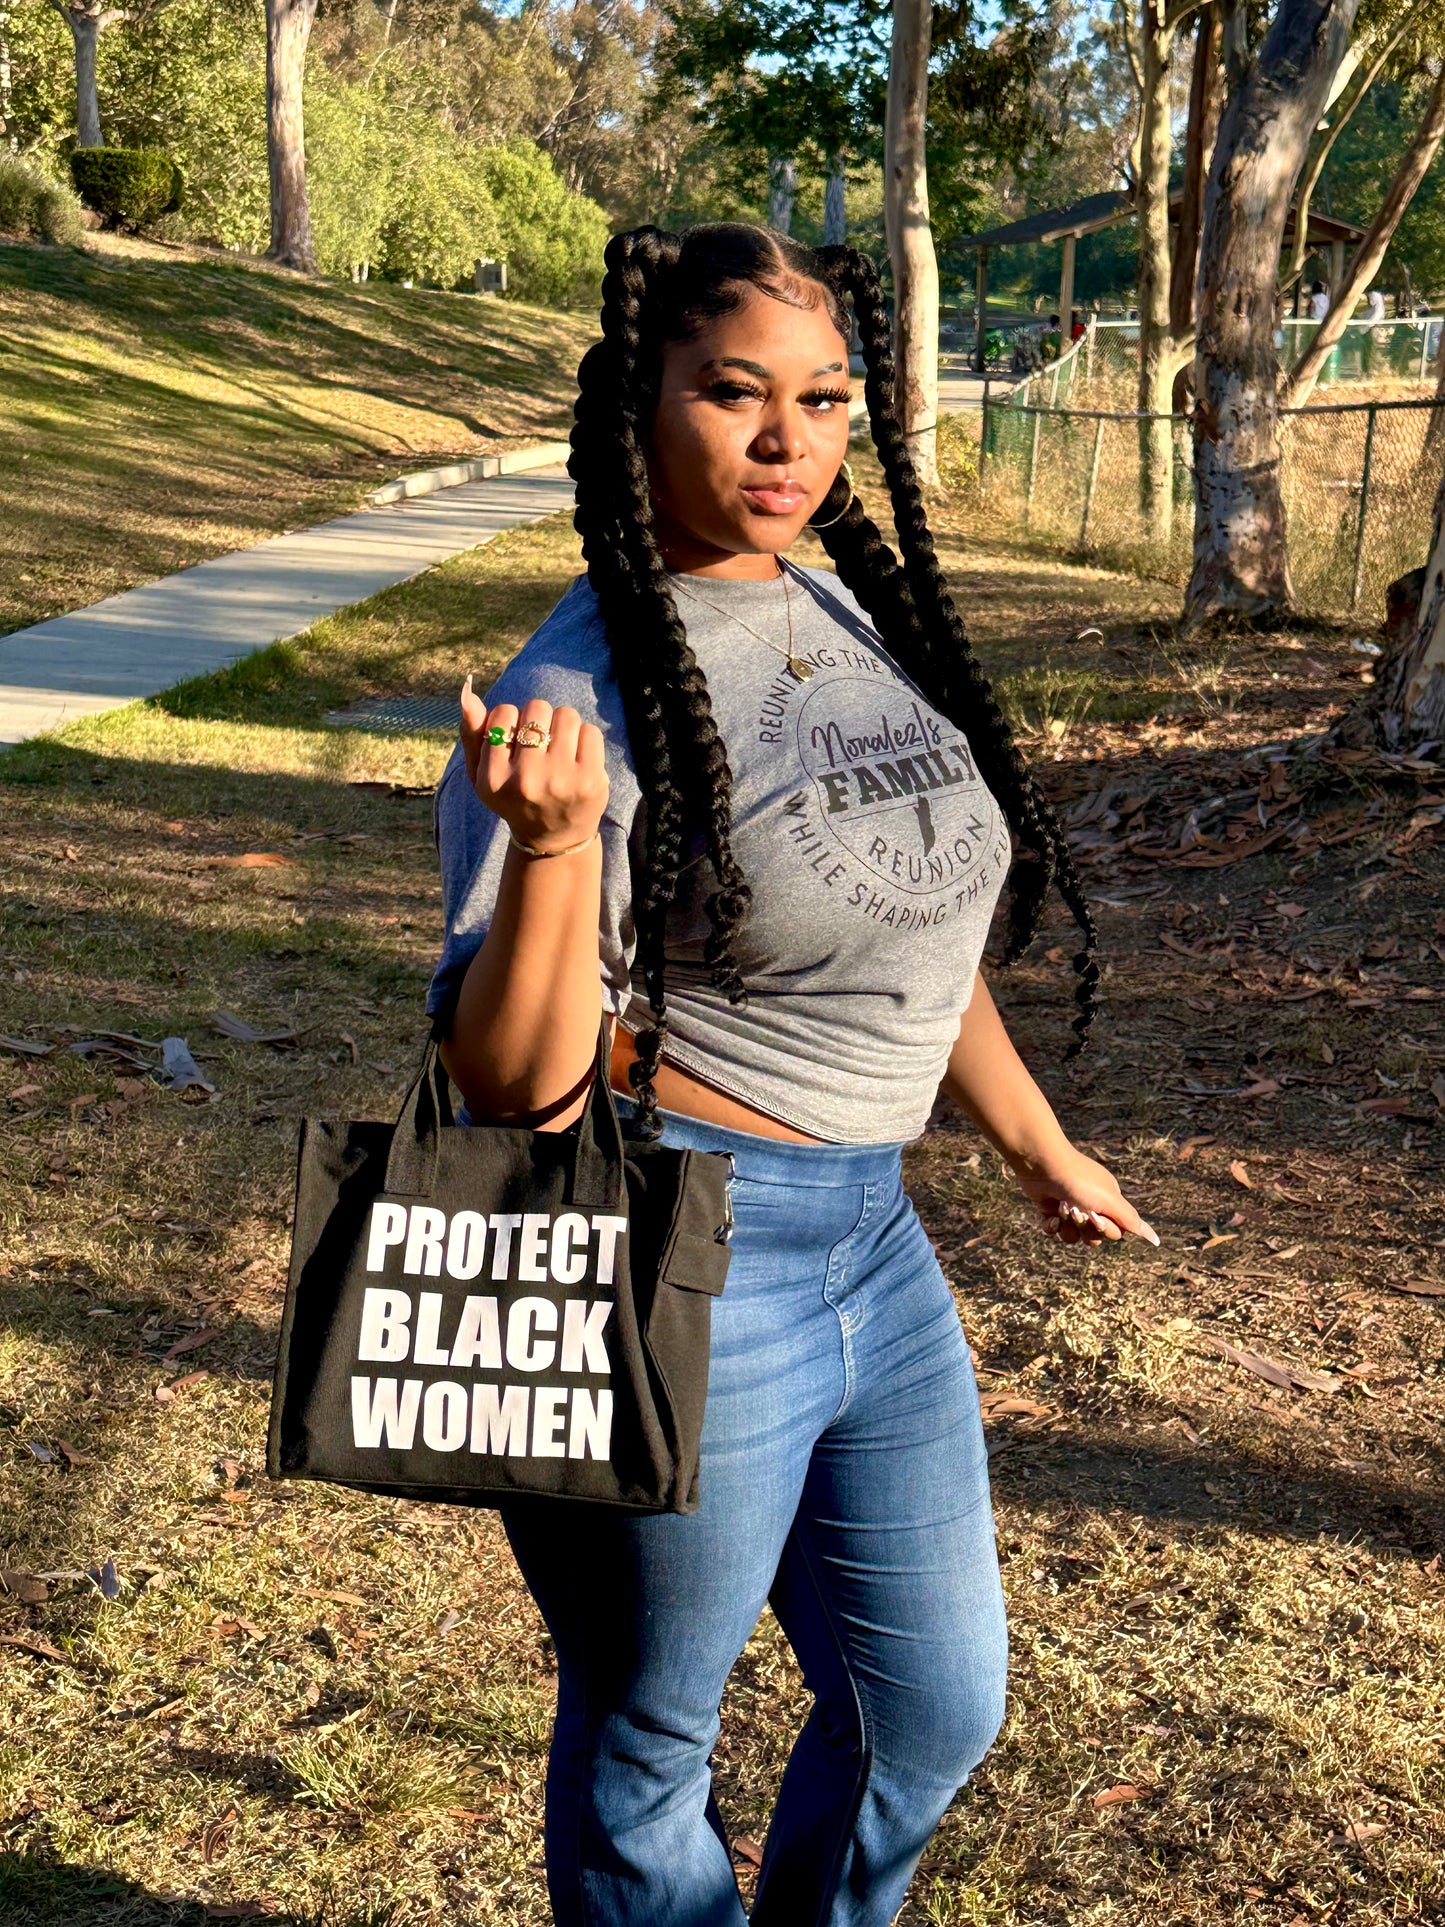 "PROTECT BLACK WOMEN" TOTE